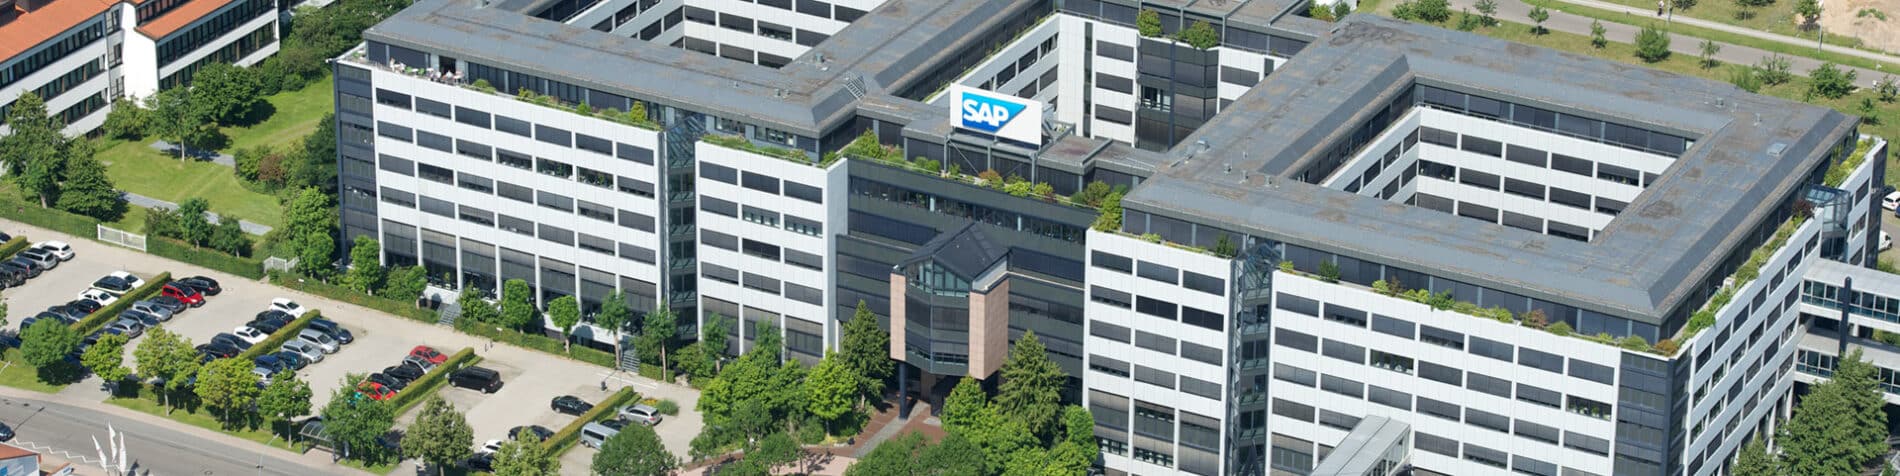 SAP Extends Contract with Executive Board Member Thomas Saueressig